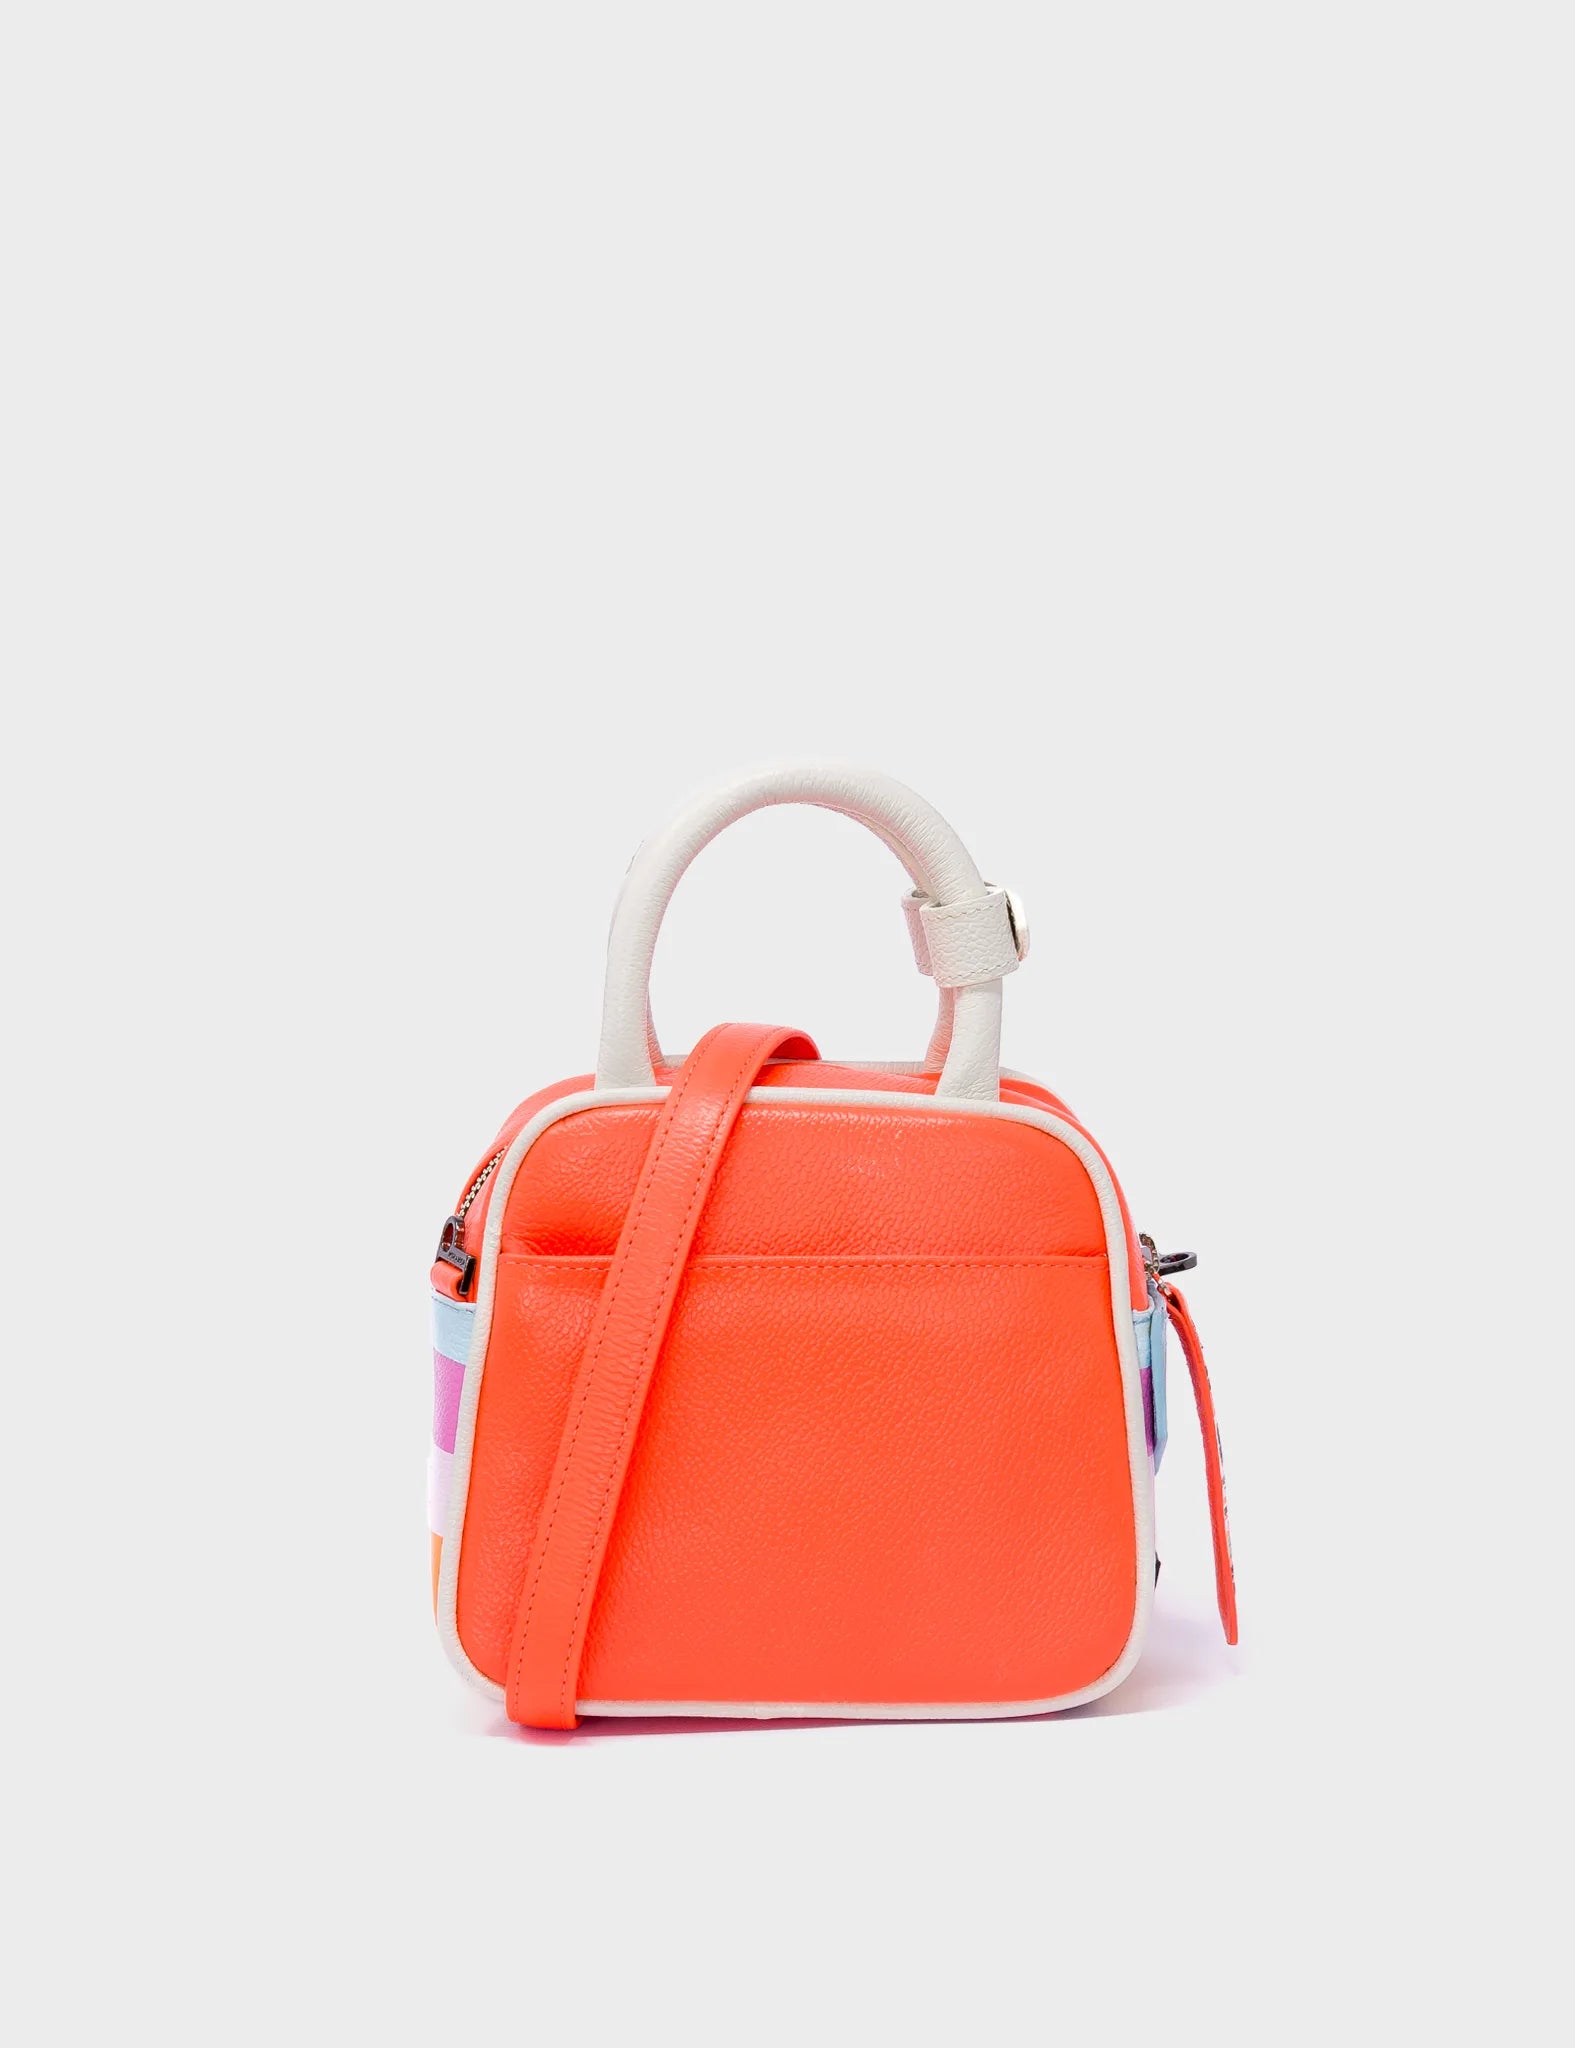 Small Crossbody Neon Orange Leather Bag - Eyes Pattern Printed - Back 